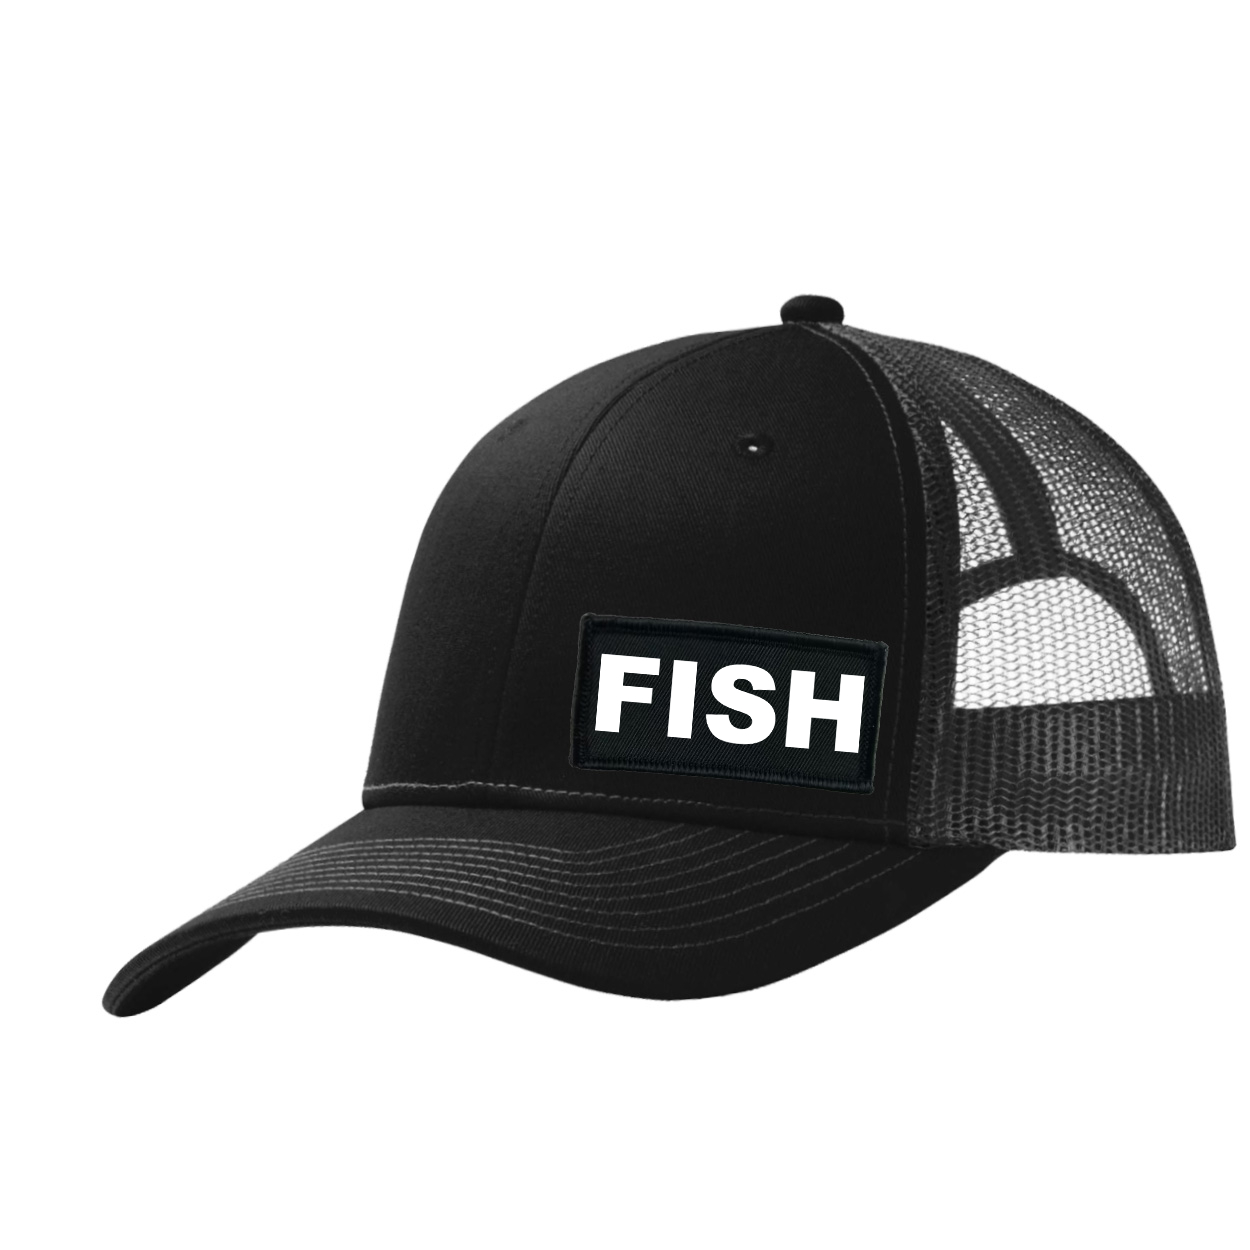 Fish Brand Logo Night Out Woven Patch Snapback Trucker Hat Black/Dark Gray (White Logo)